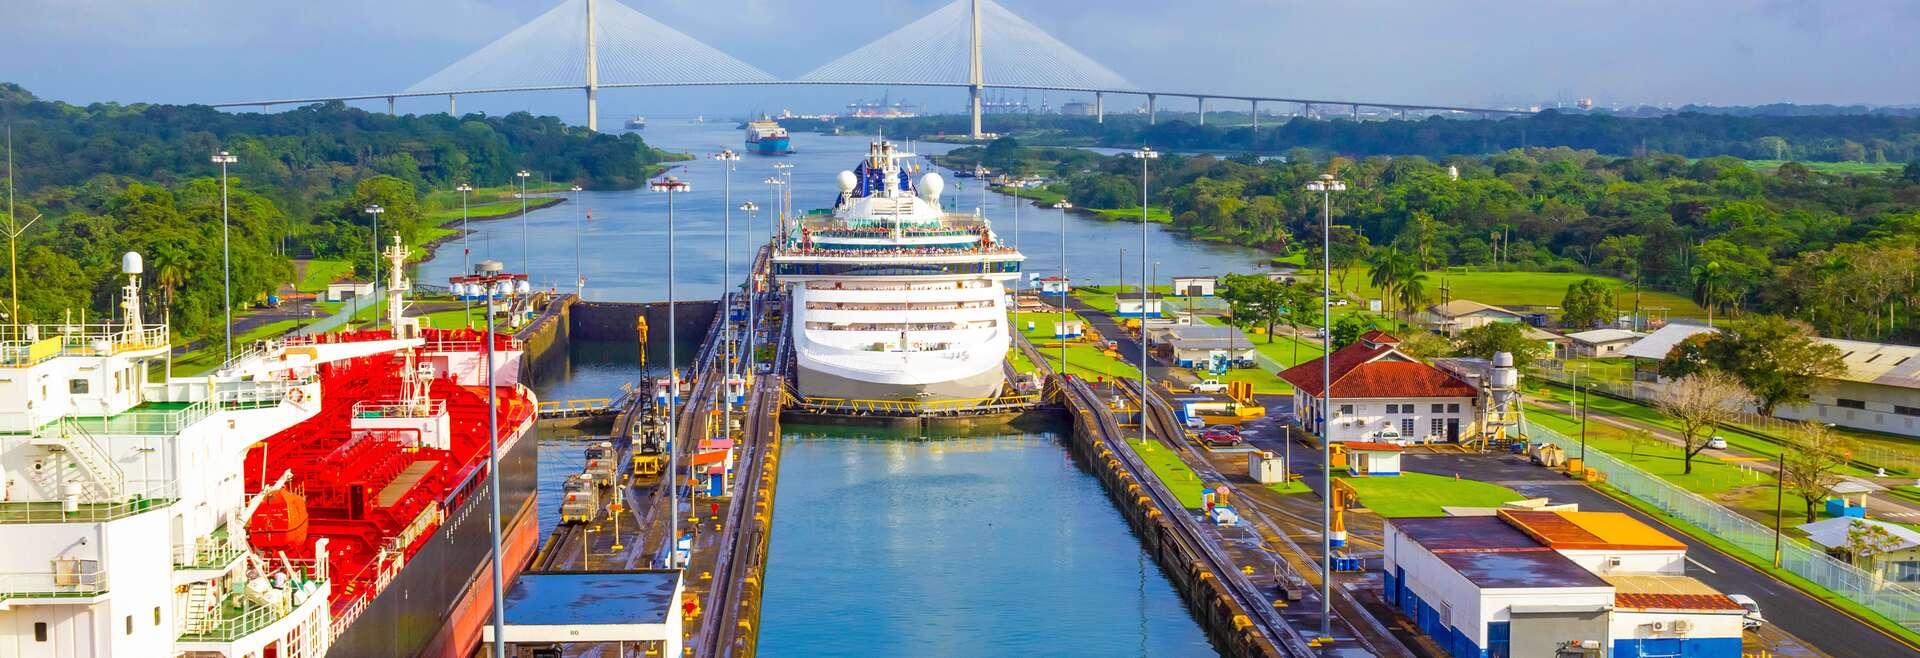 Séjour linguistique Panama, Panama City, Panama canal crossing